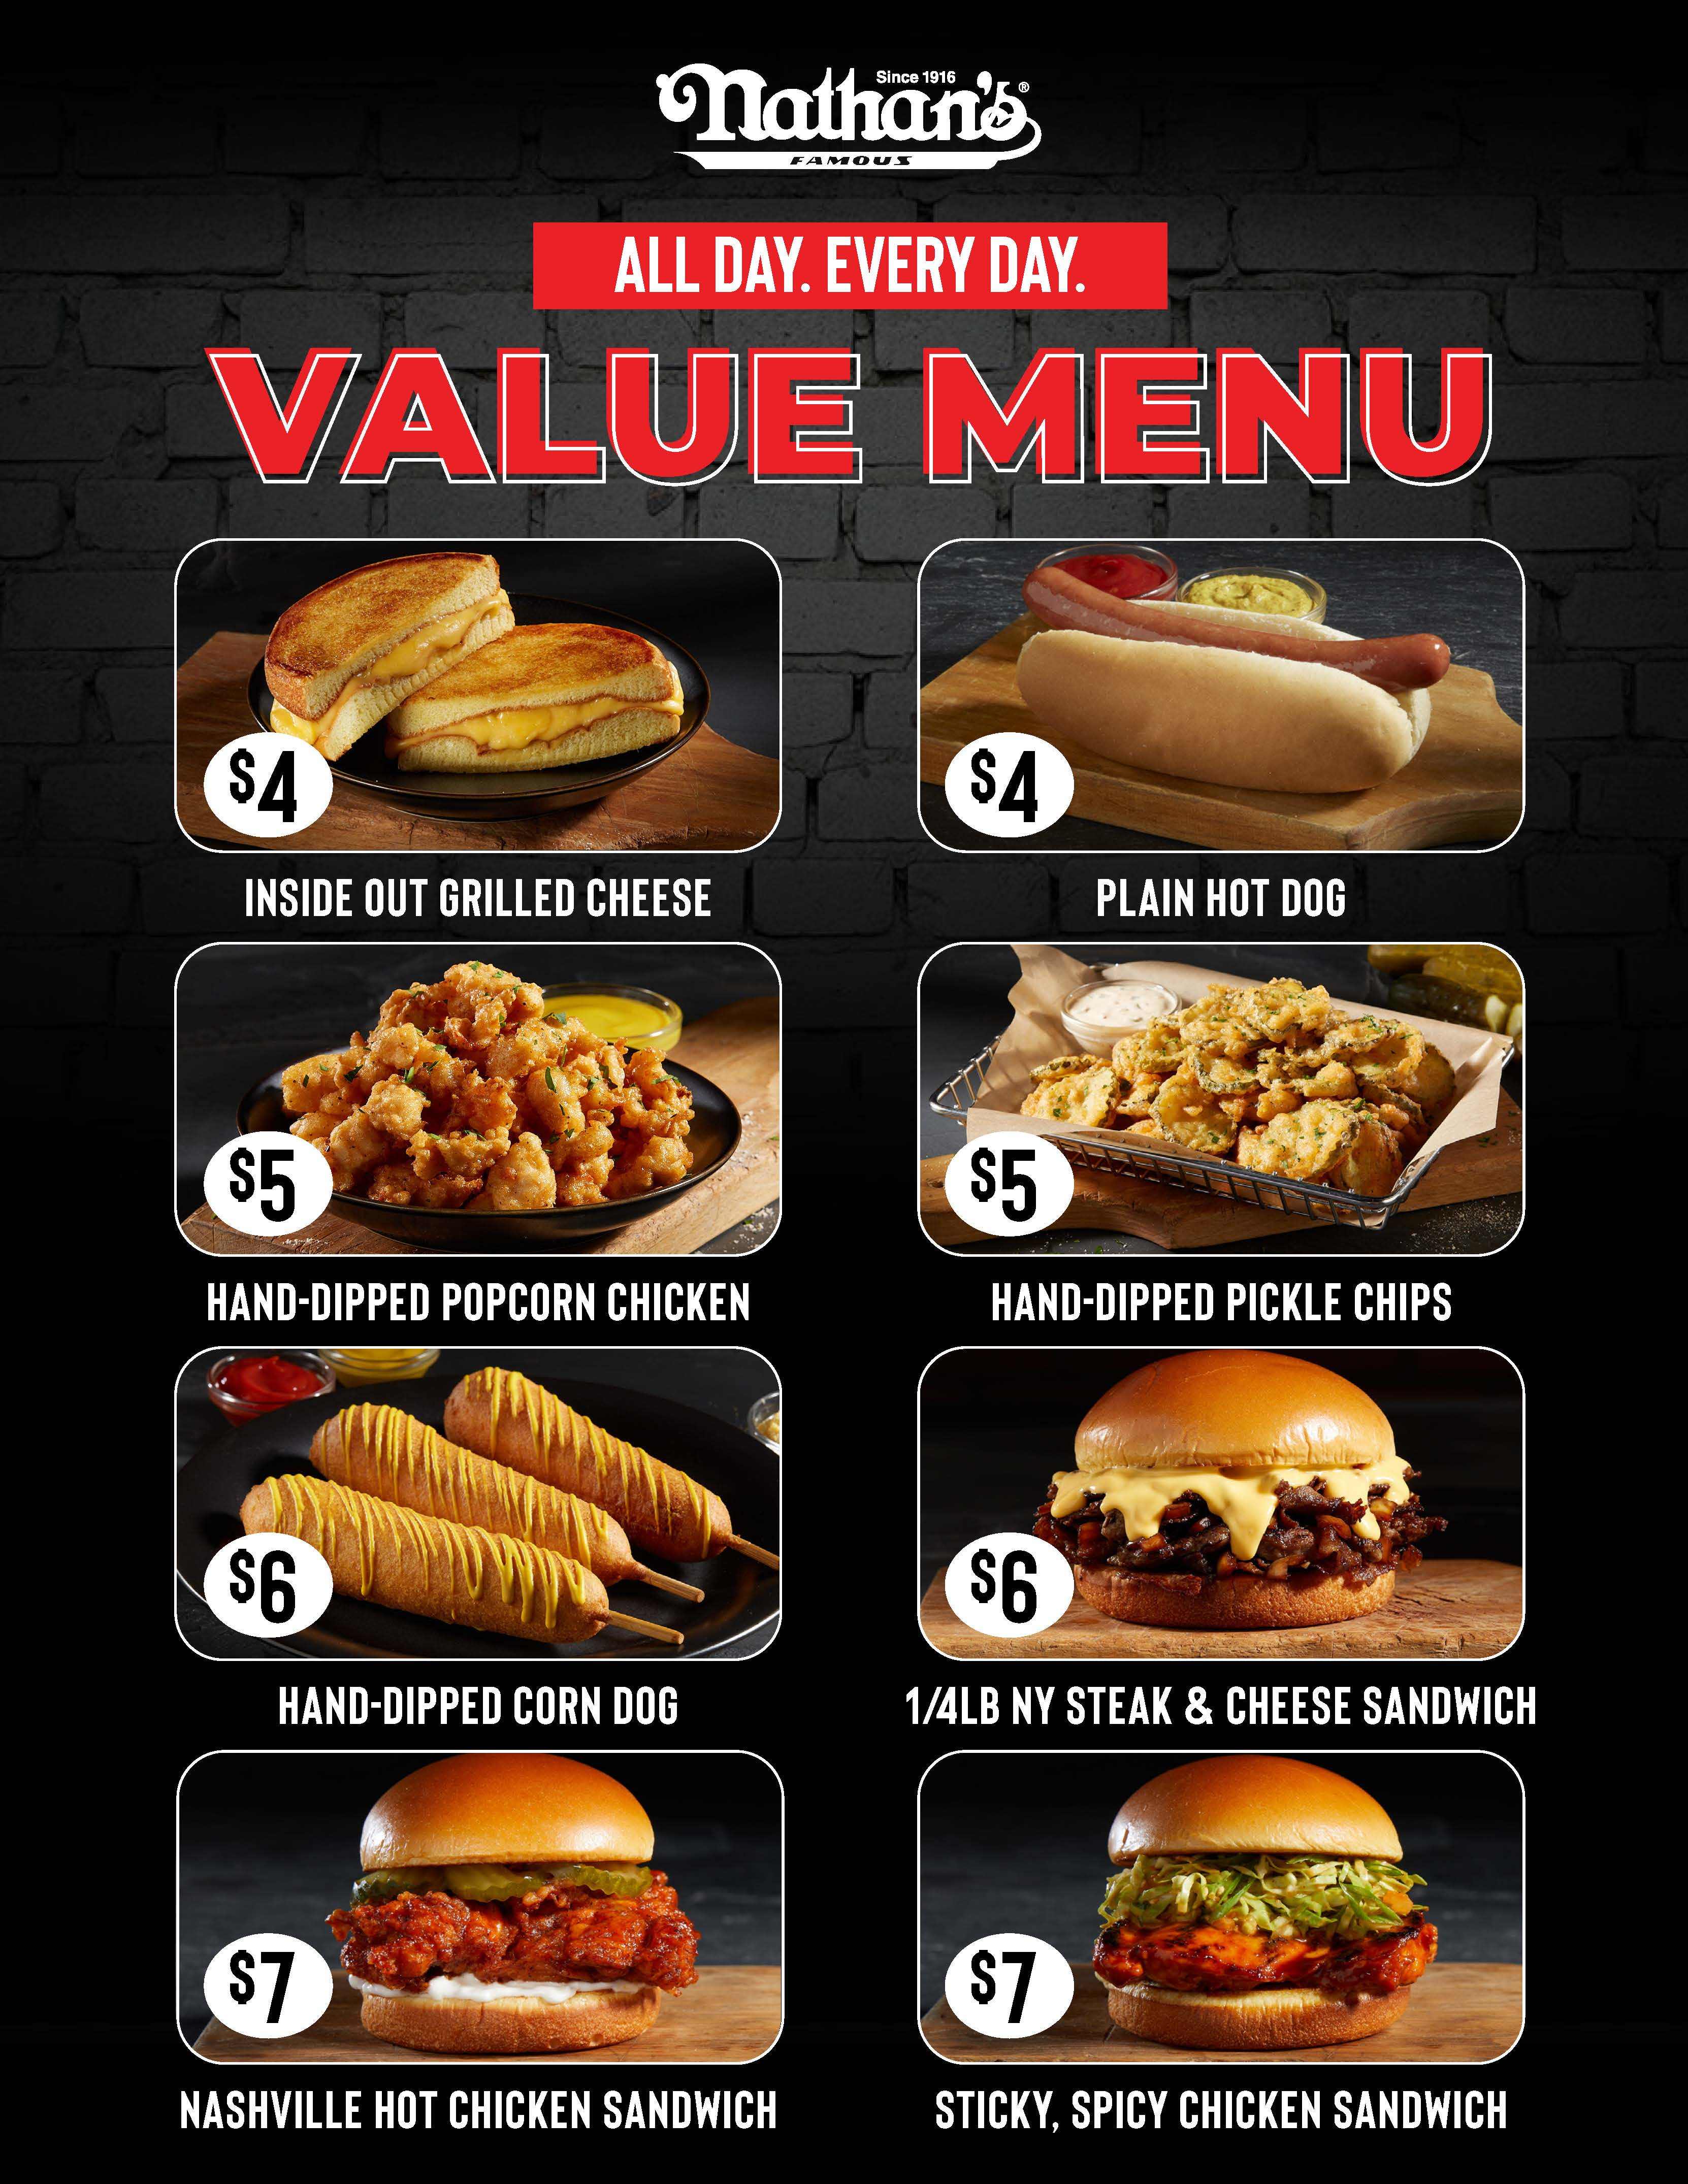 Value-conscious menu specials